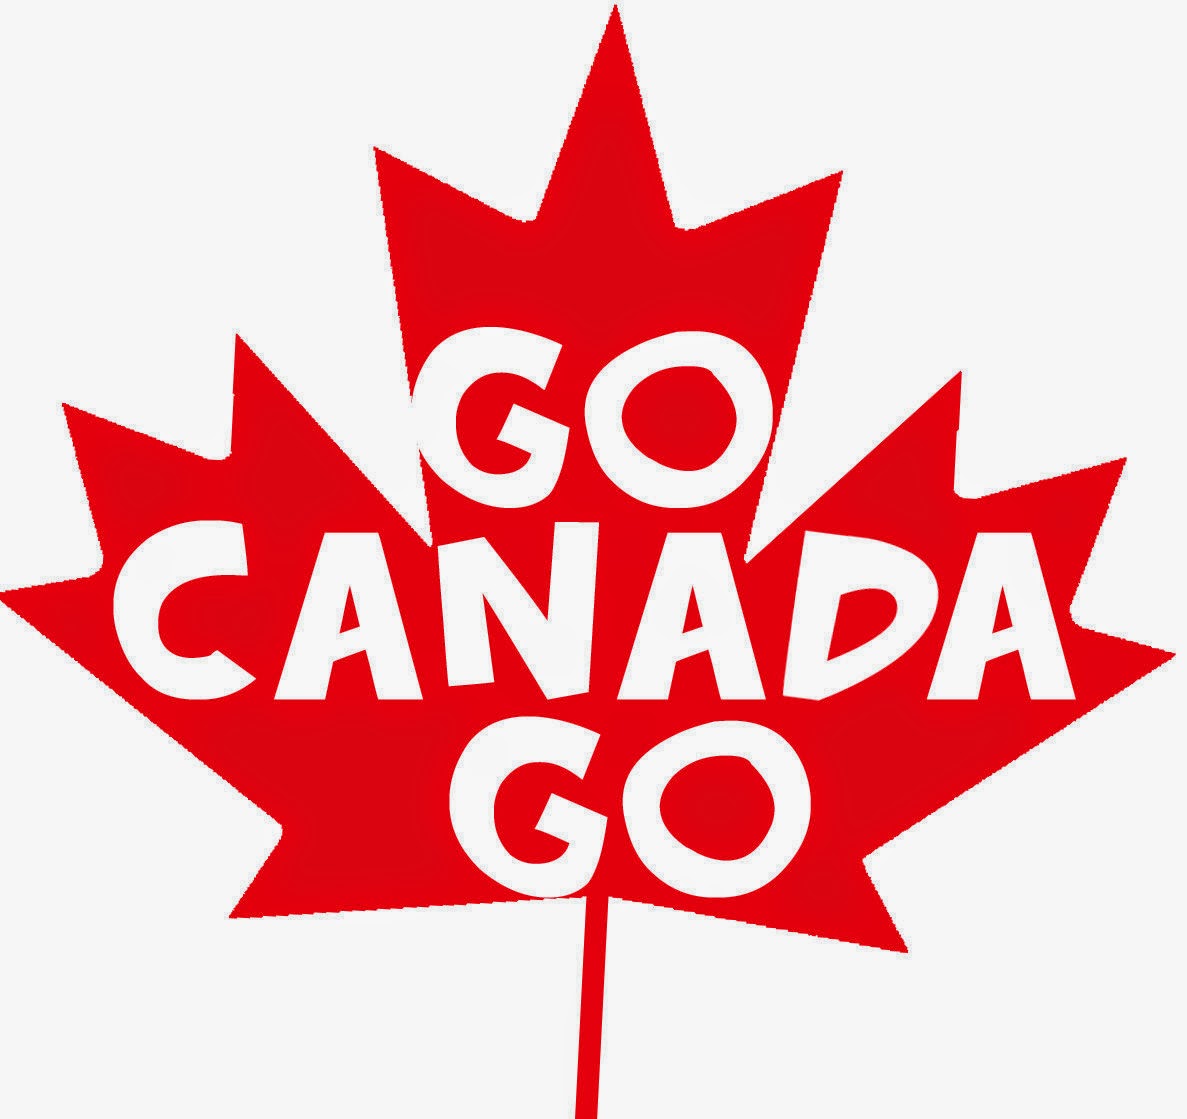 Go Canada Go!